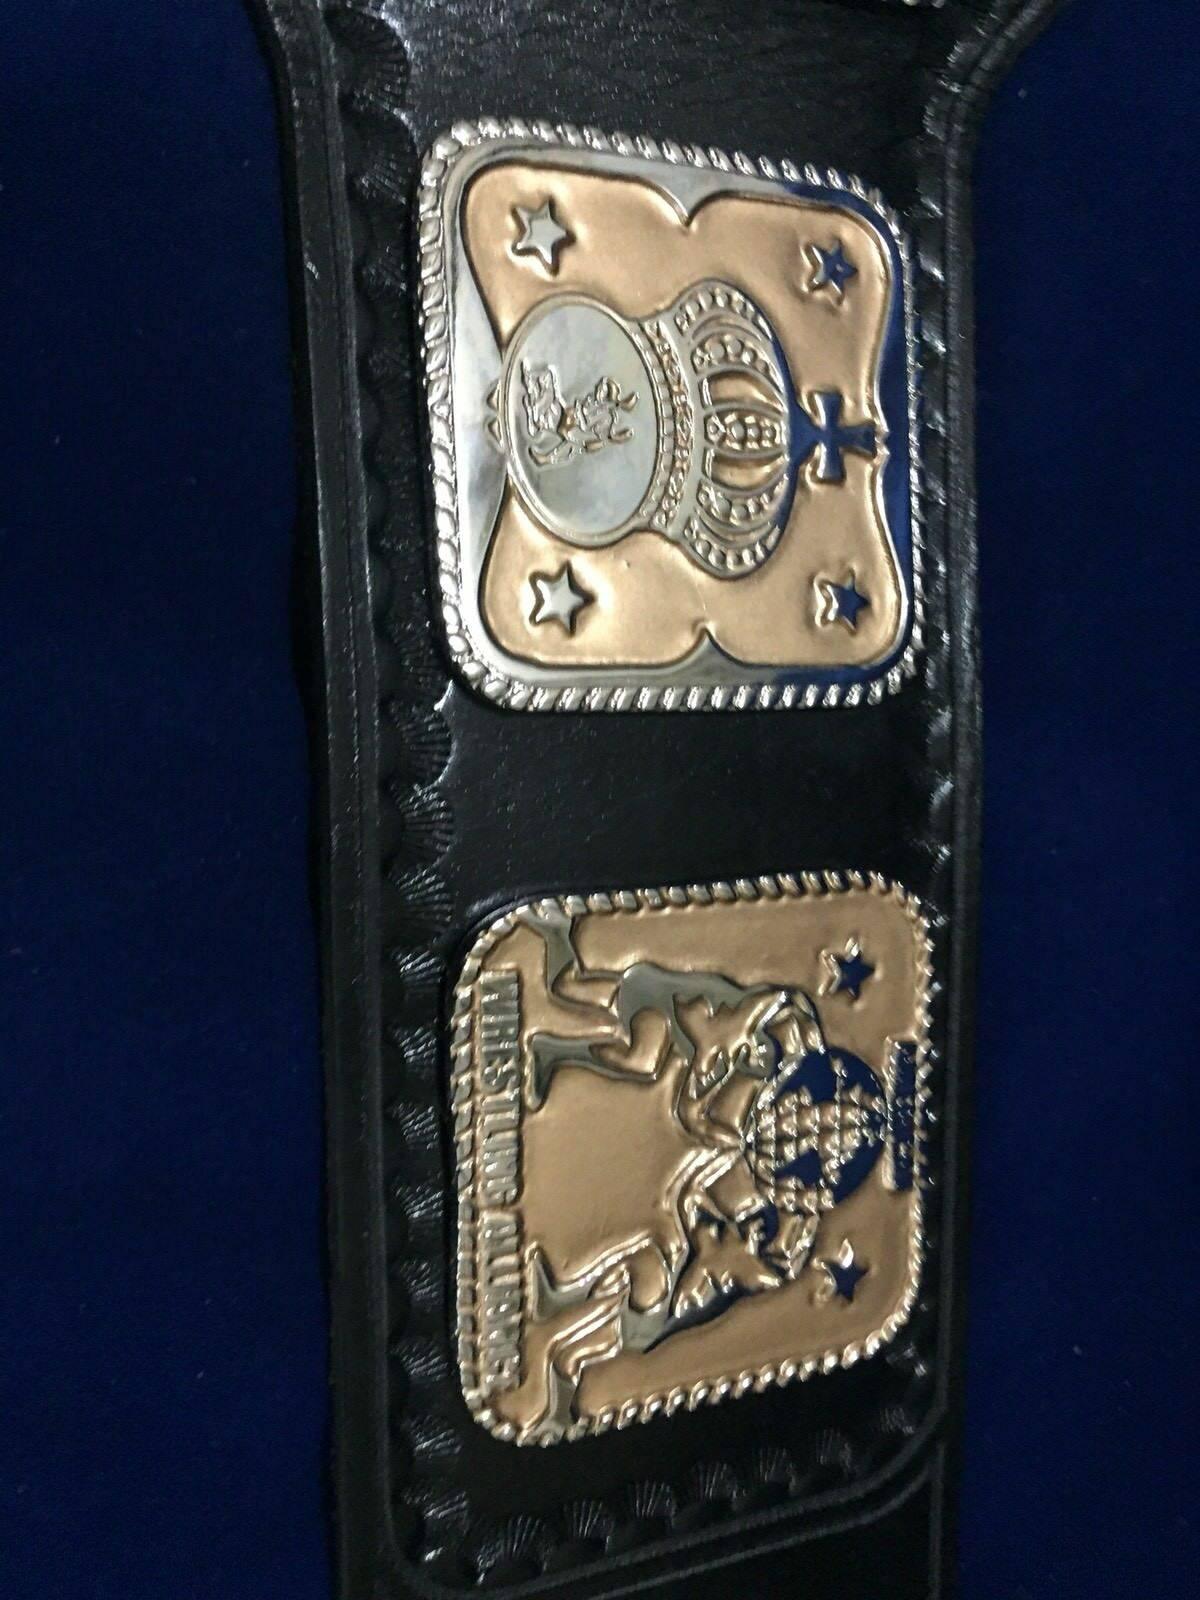 AWA WORLD TAG TEAM 24K GOLD Championship Belt